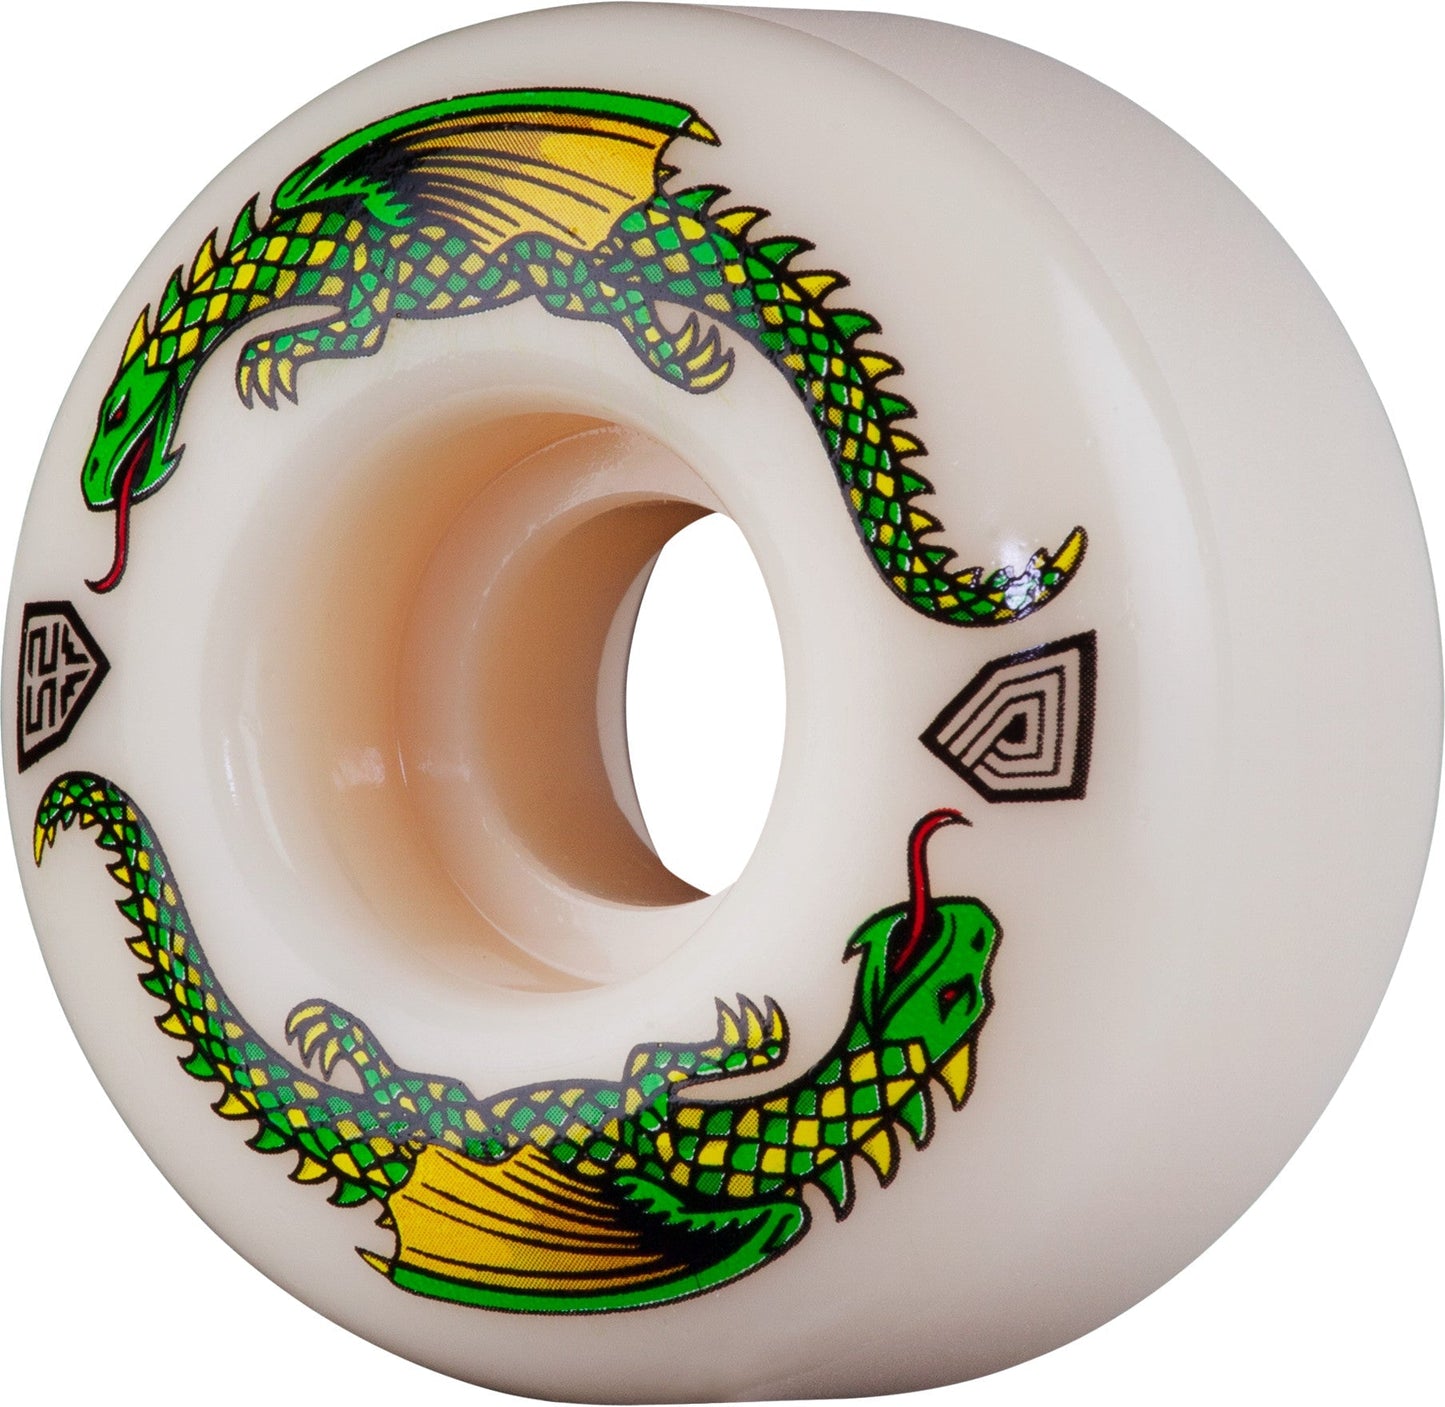 Powell Peralta Dragon Formula Green Dragon Skateboard Wheels - Motion Boardshop